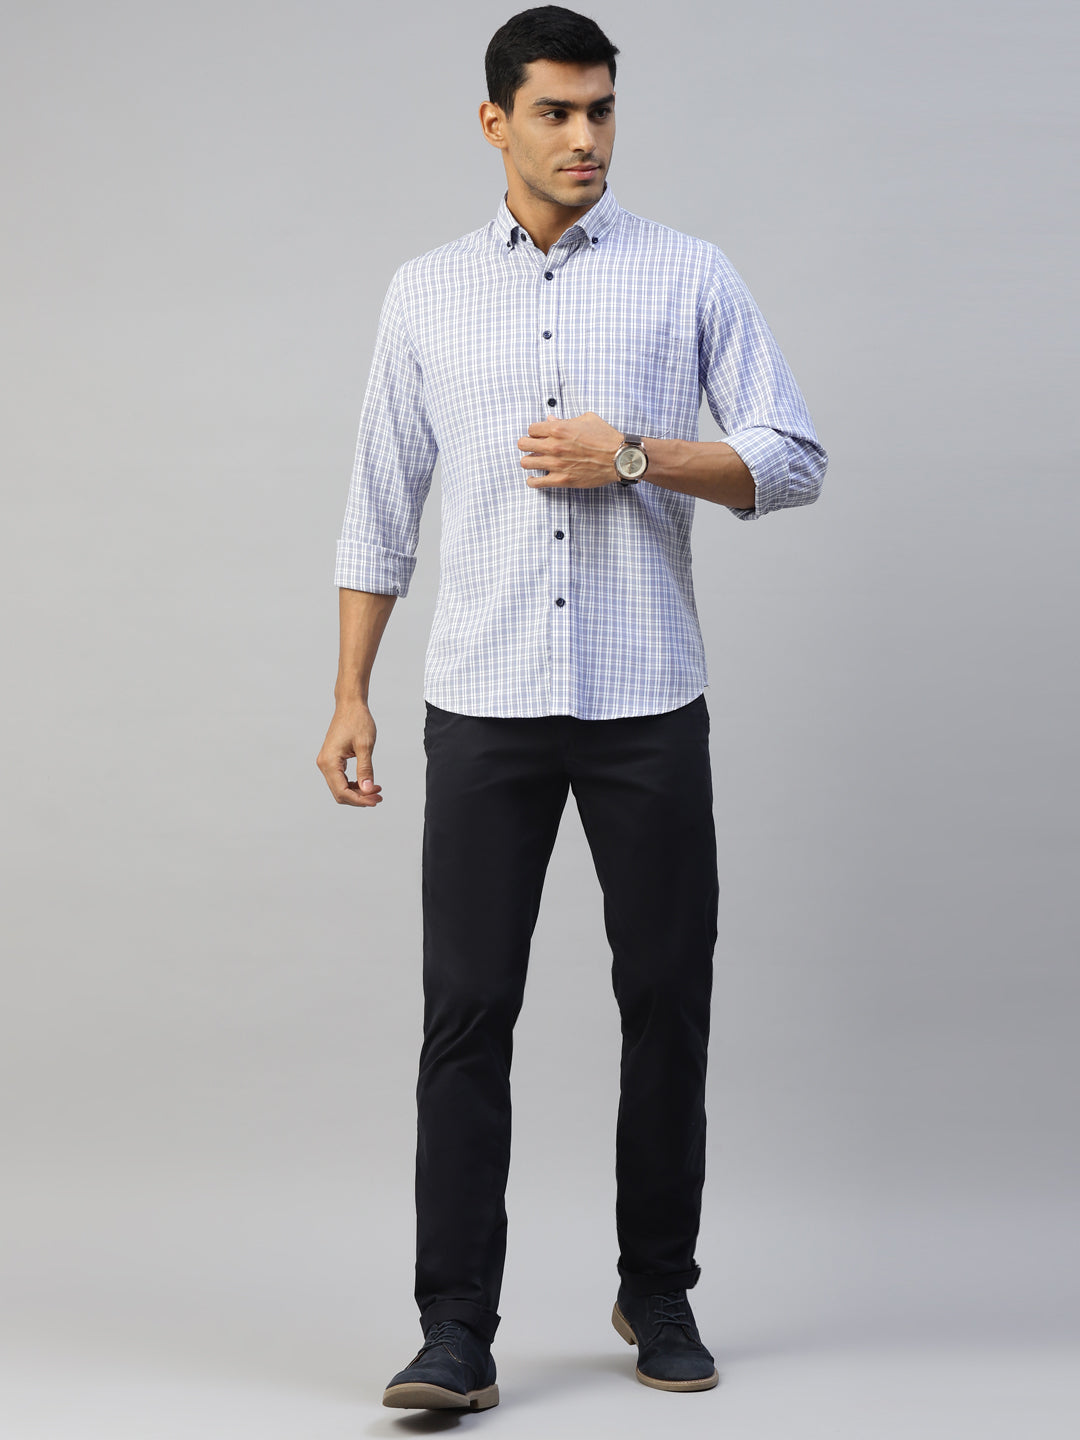 Men's Blue Checks Formal Shirt by Don Vino